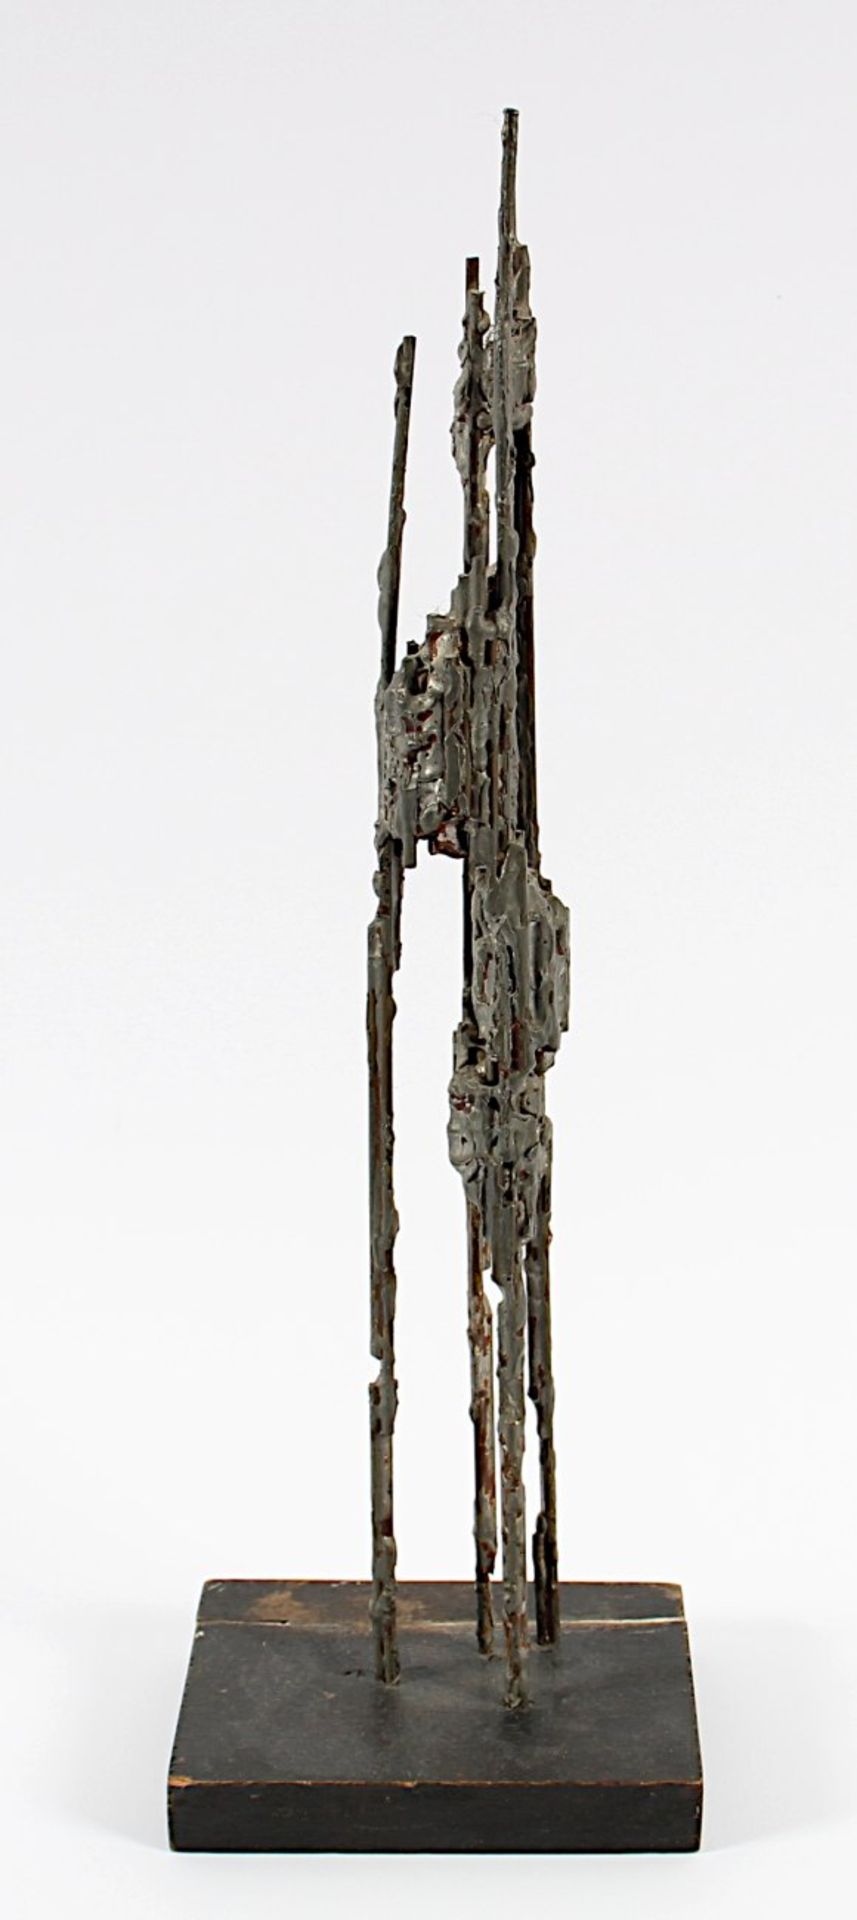 MATSCHINSKY-DENNINGHOFF, Brigitte und Martin, "o.T. Form Nr. 15", Skulptur, Zinn, H 39, unter dem